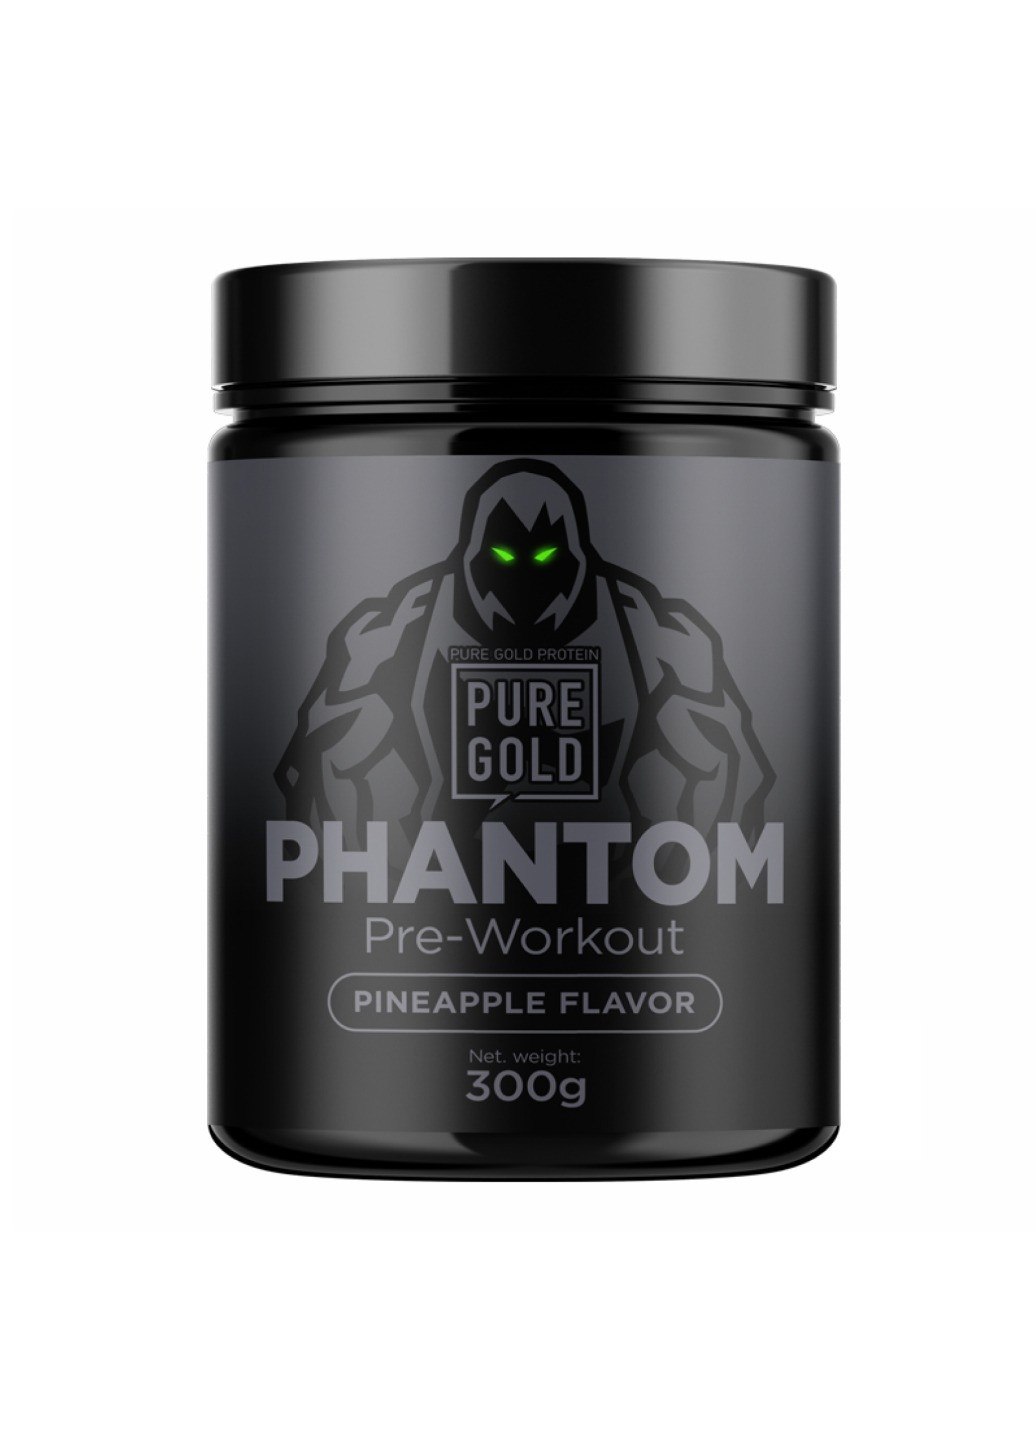 Стимулятор для тренировок Phantom Pre-Workout - 300g Pineapple Paradise Pure Gold Protein (270007900)